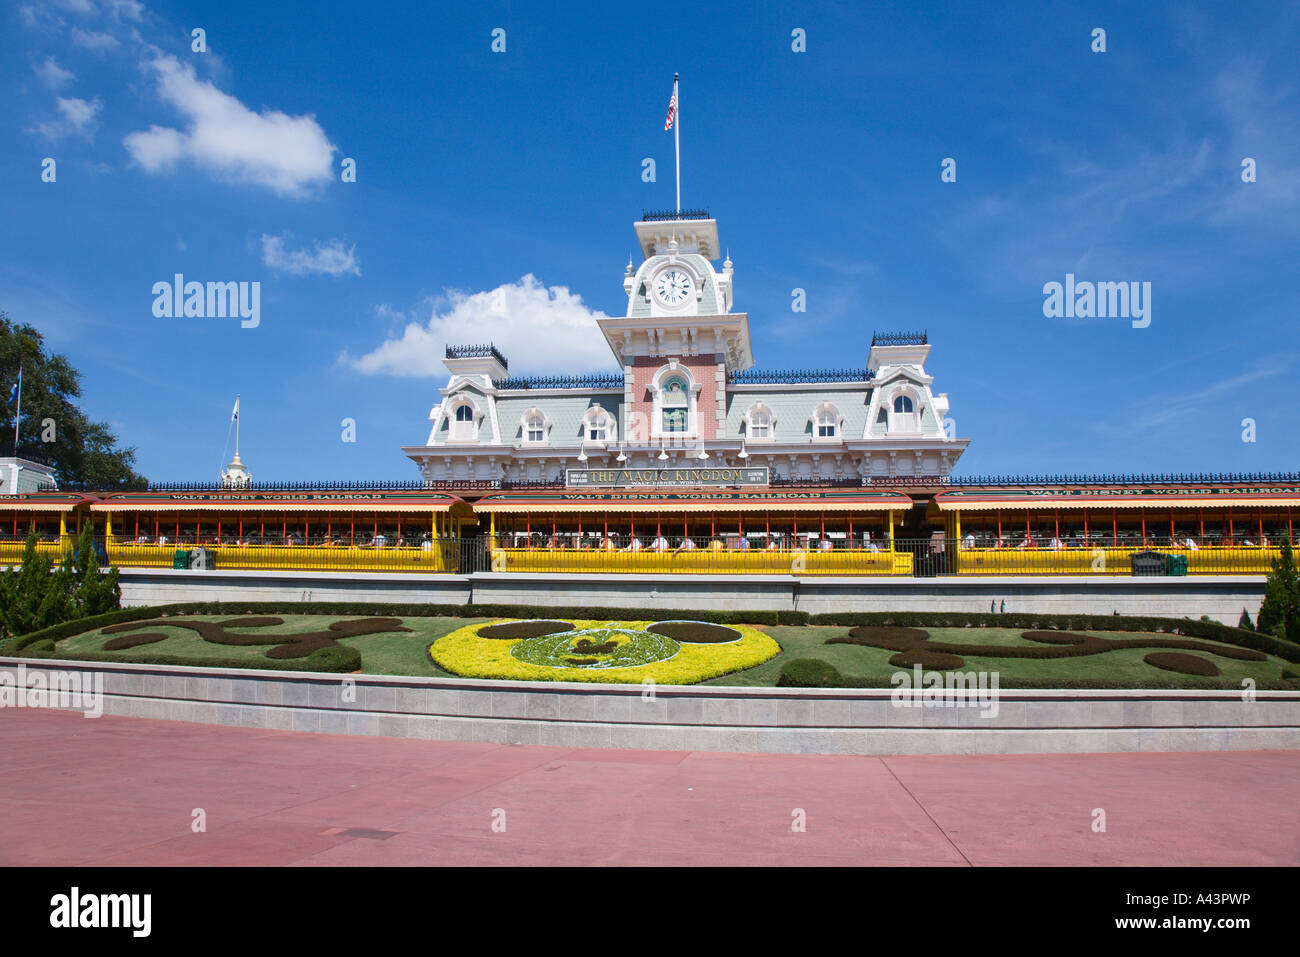 Disney magic kingdom train hi-res stock photography and images - Alamy